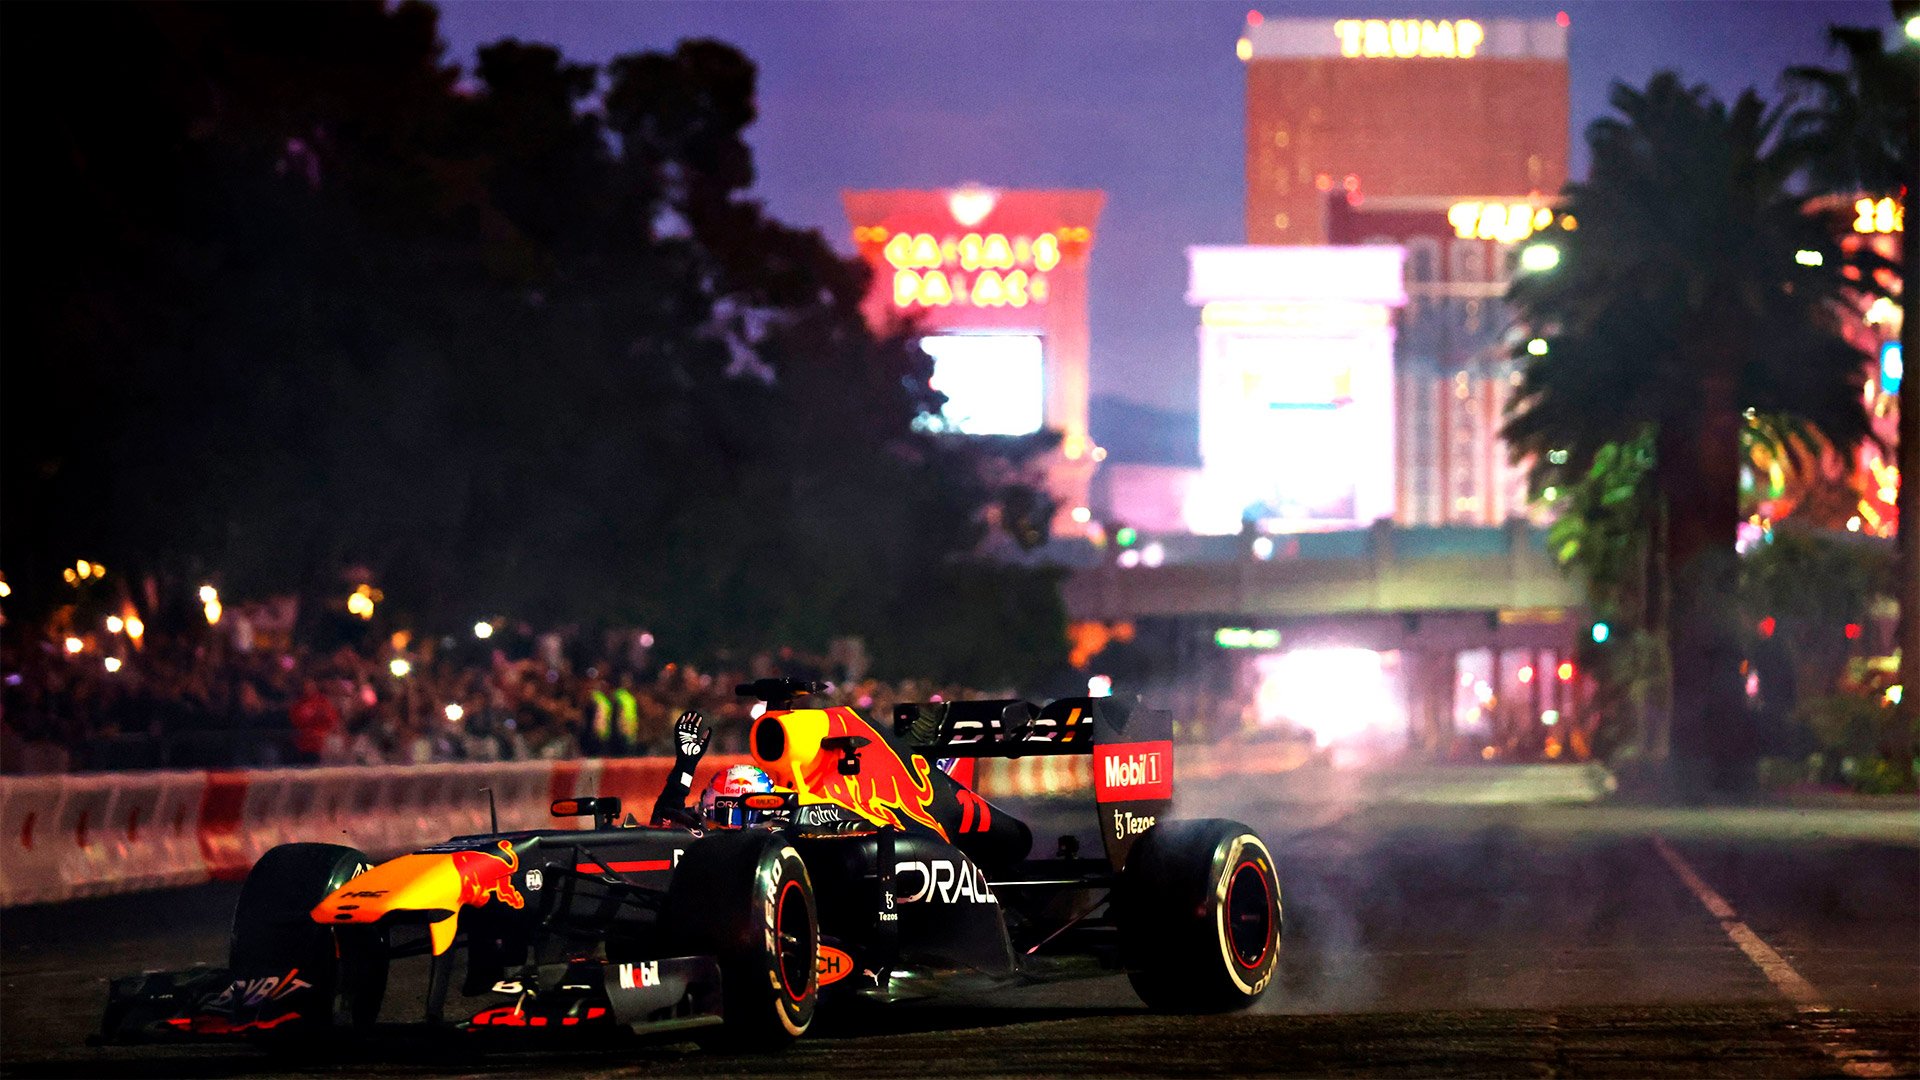 Caesars launches 5M "Emperor Package" for Las Vegas F1 Grand Prix